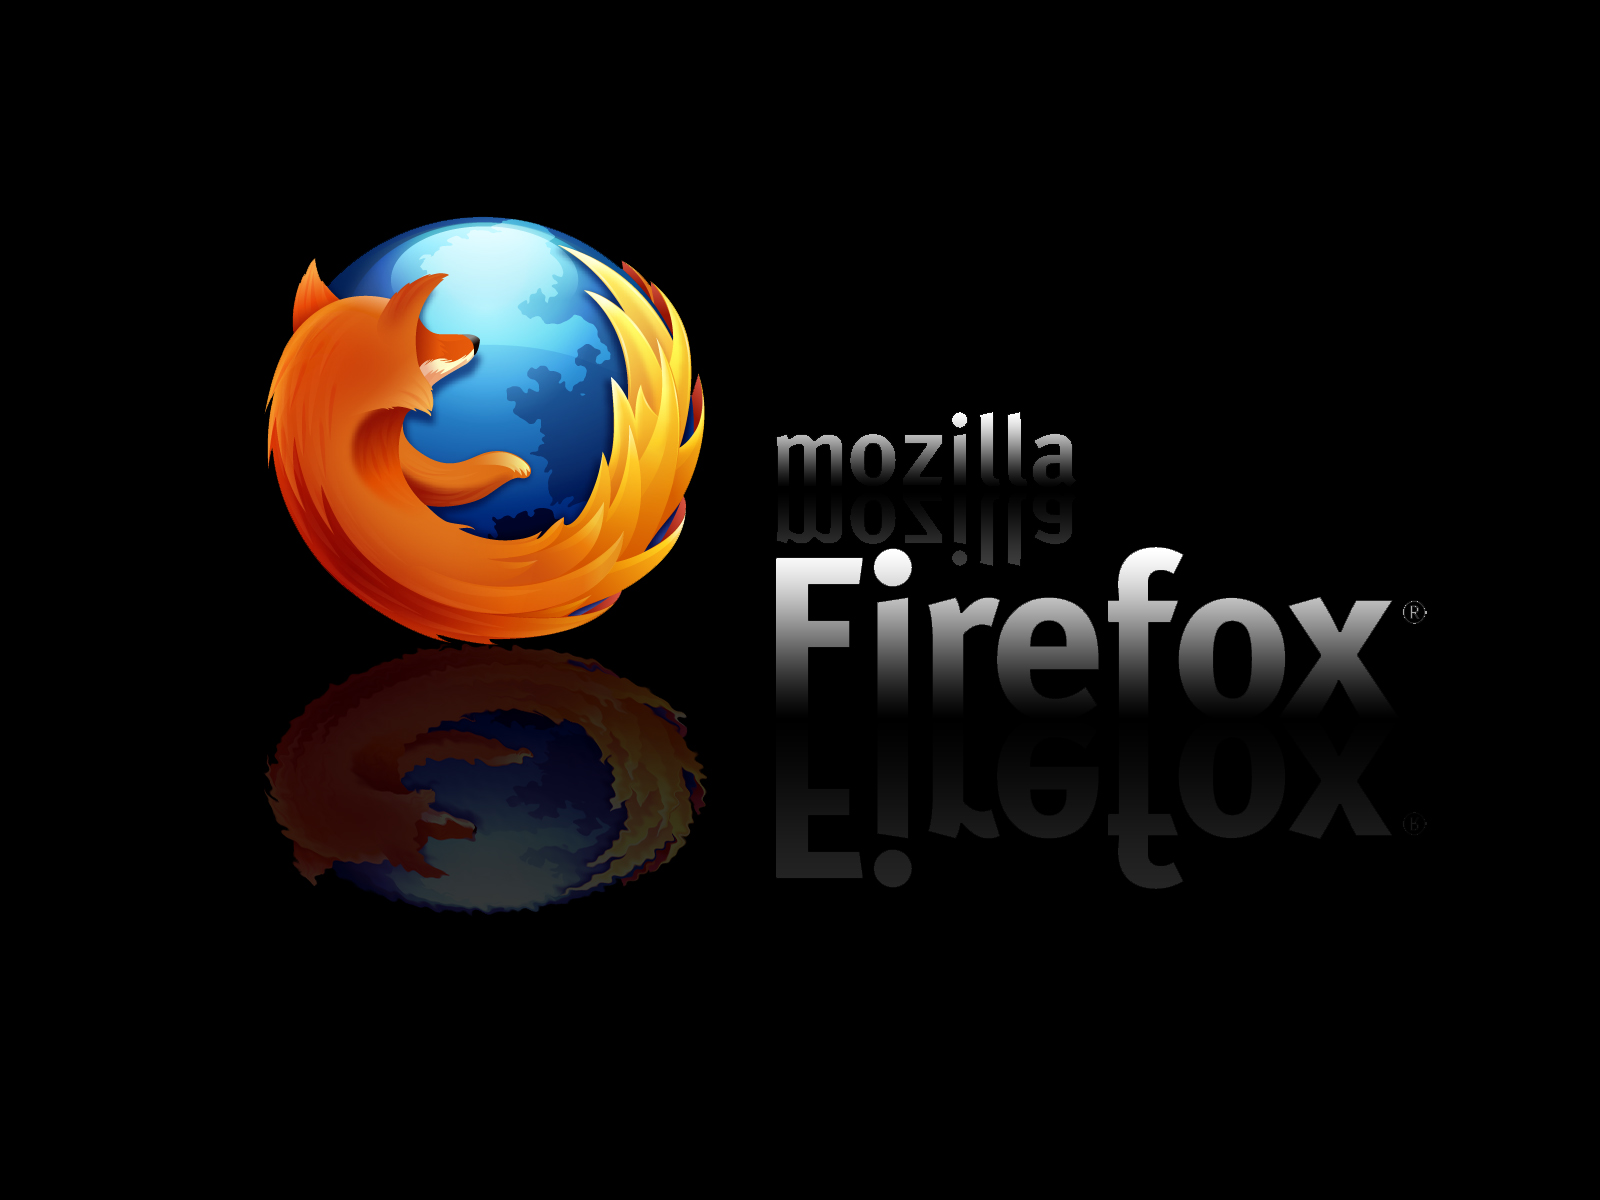 mozilla firefox 2.0 free download